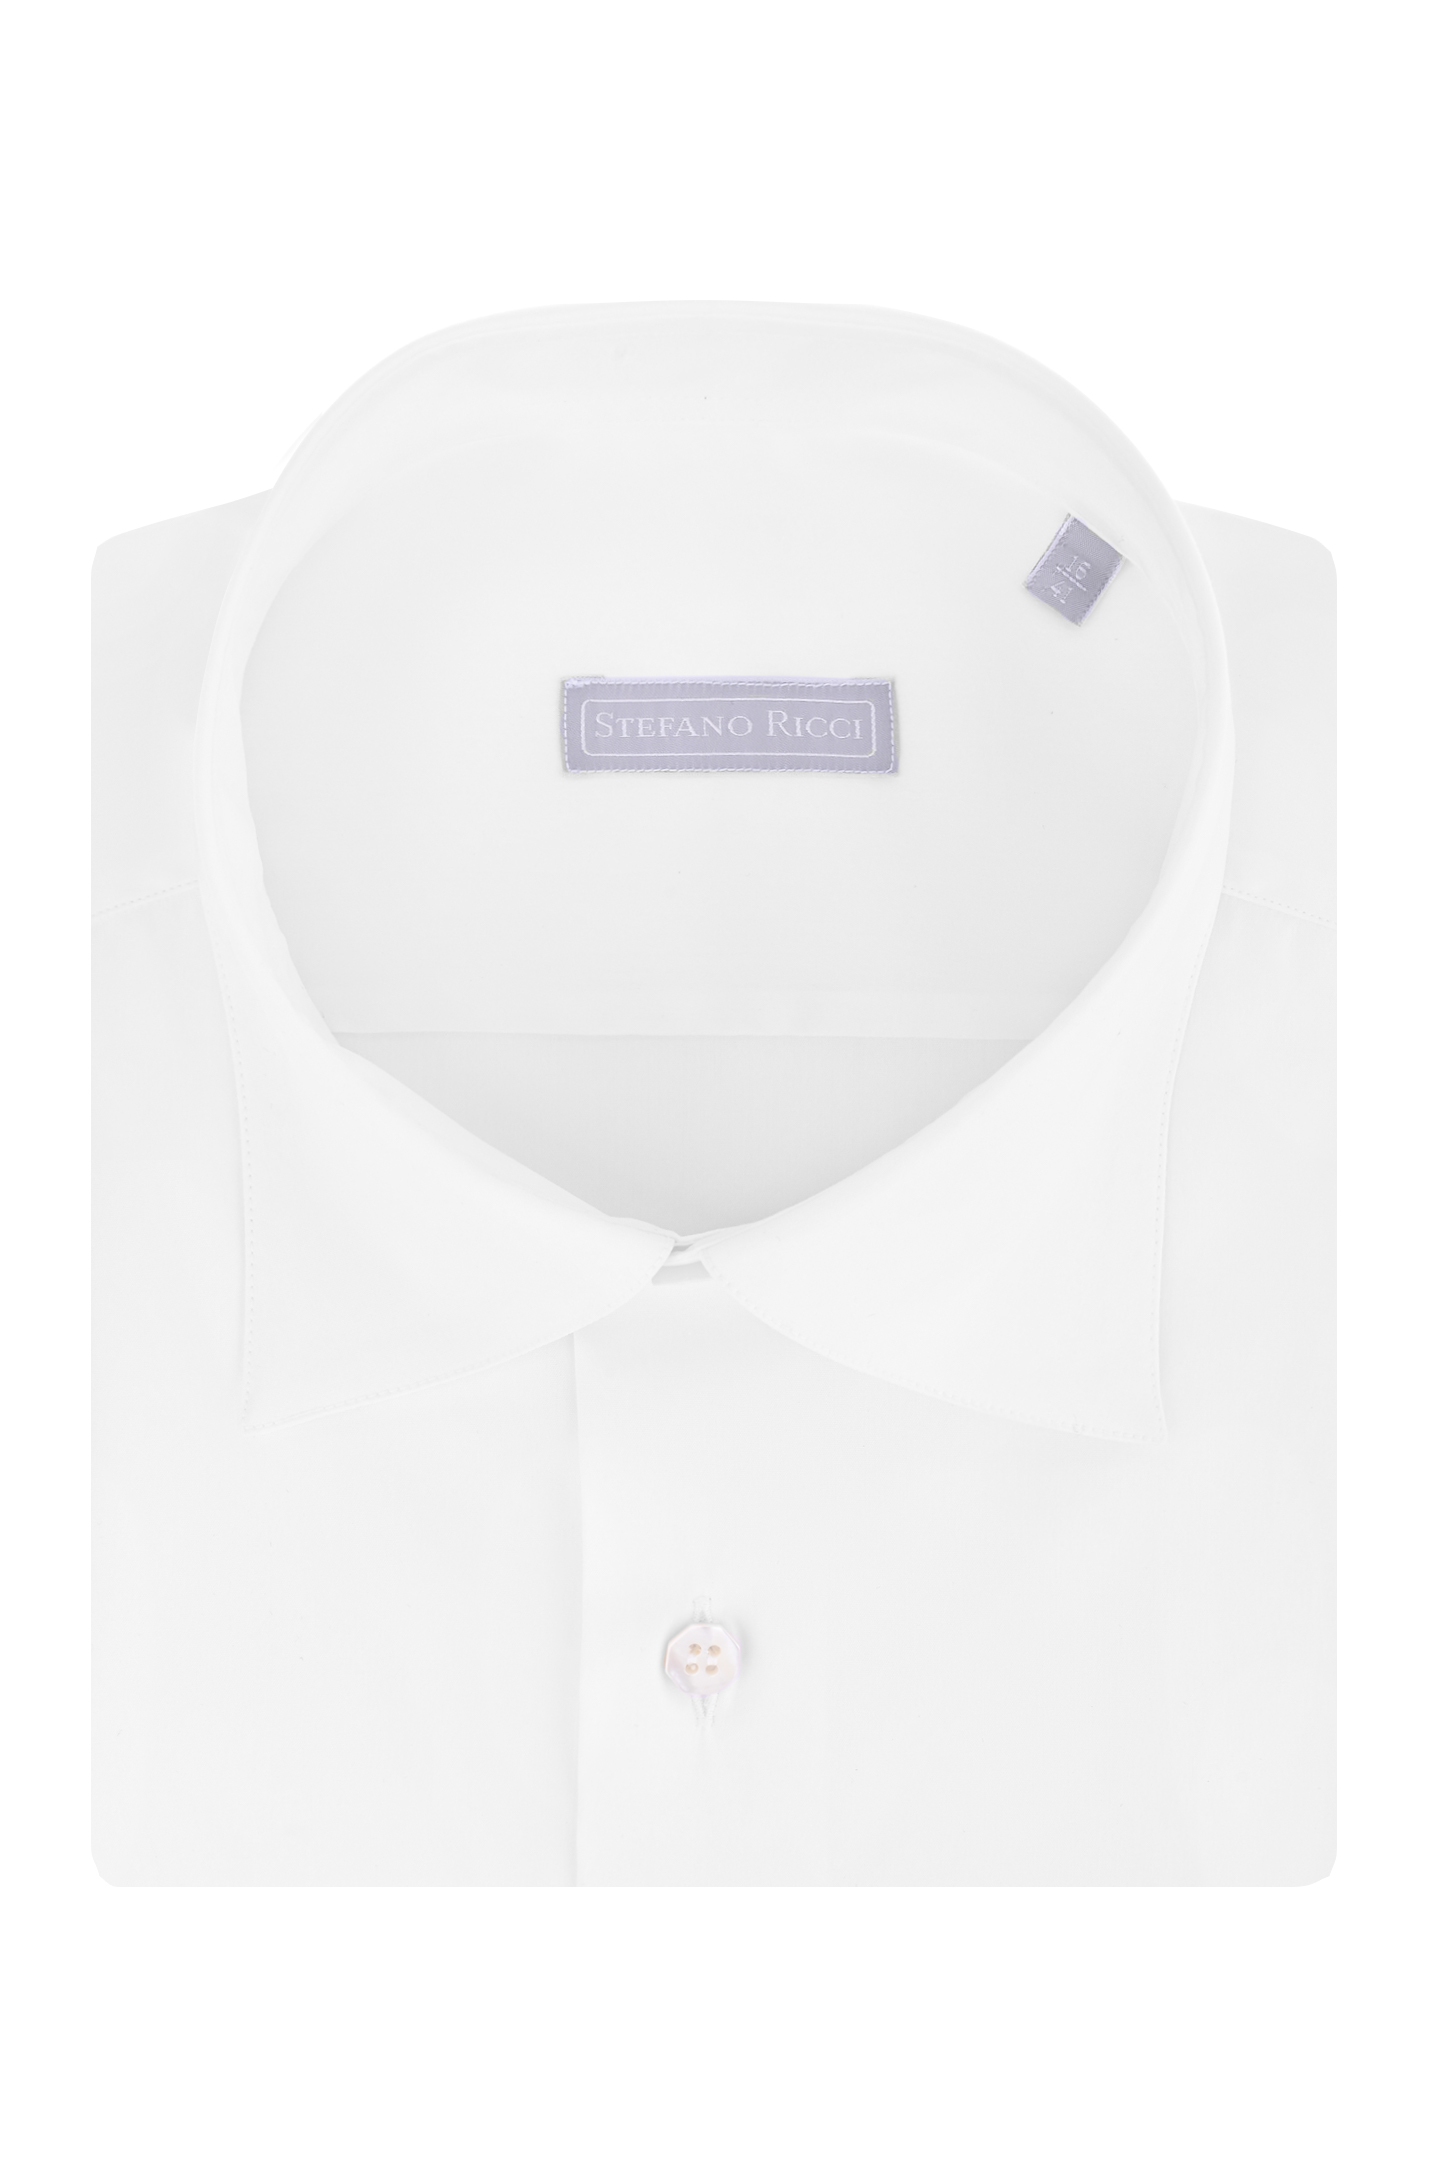 Рубашка STEFANO RICCI MC003780 M1955, цвет: Белый, Мужской